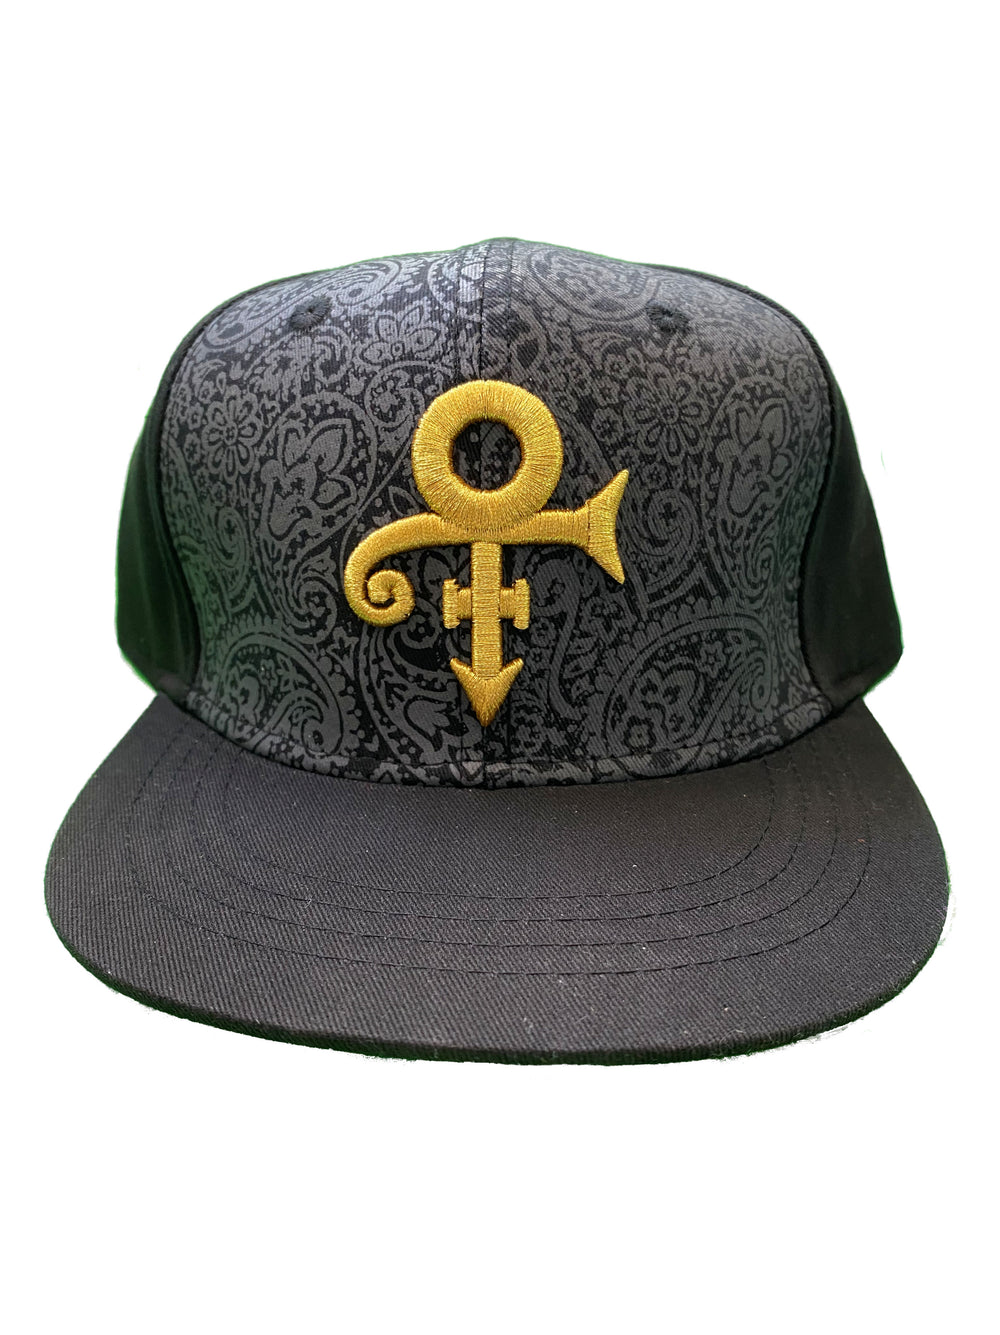 Prince Official Paisley Park Merchandise Snapback Cap Love Symbol New